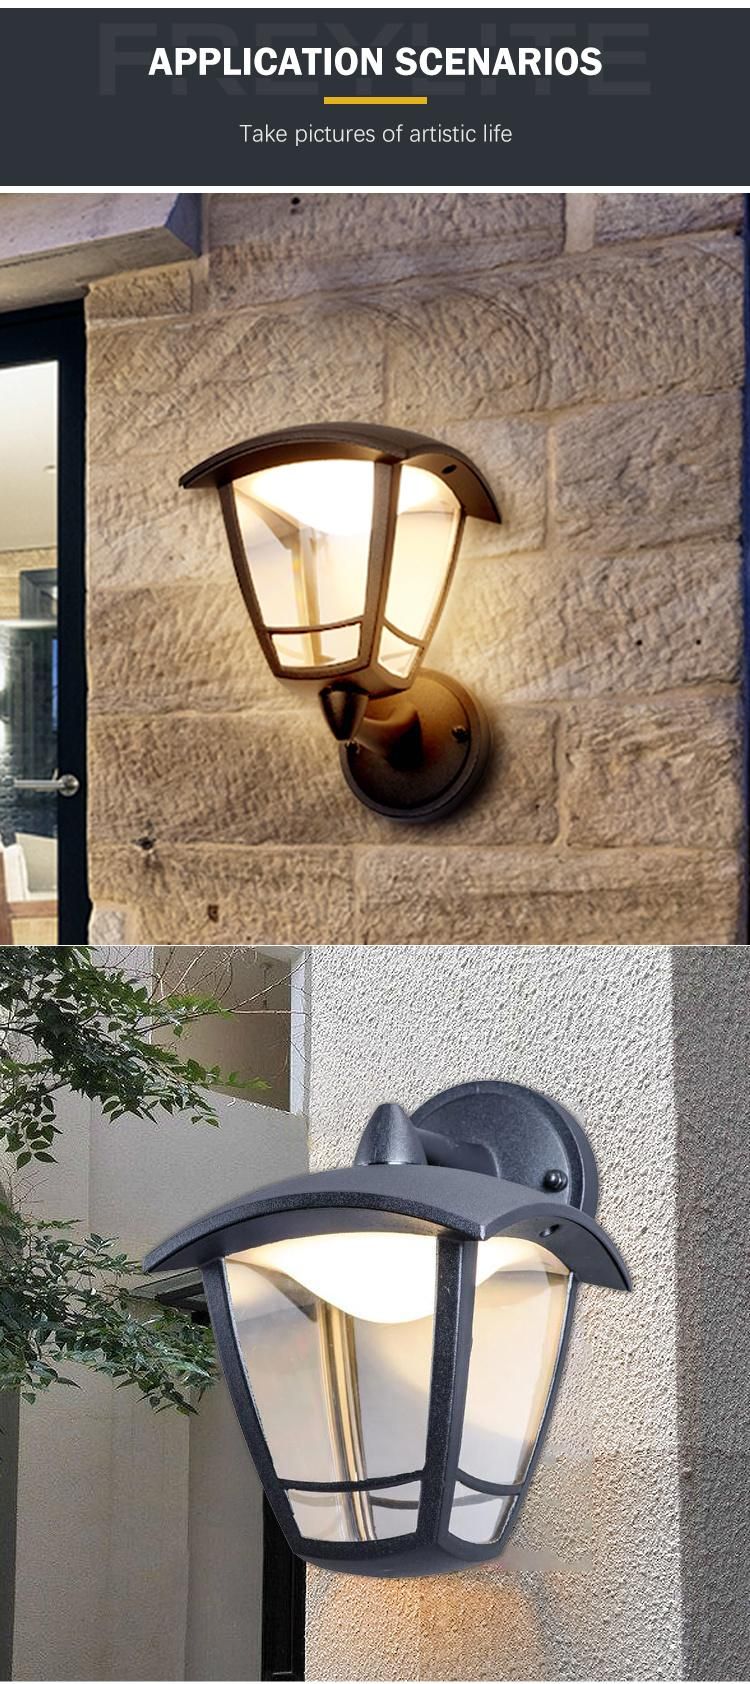 Hot Sale Alva / OEM Al0206-6 Washer with SAA LED Wall Lamp